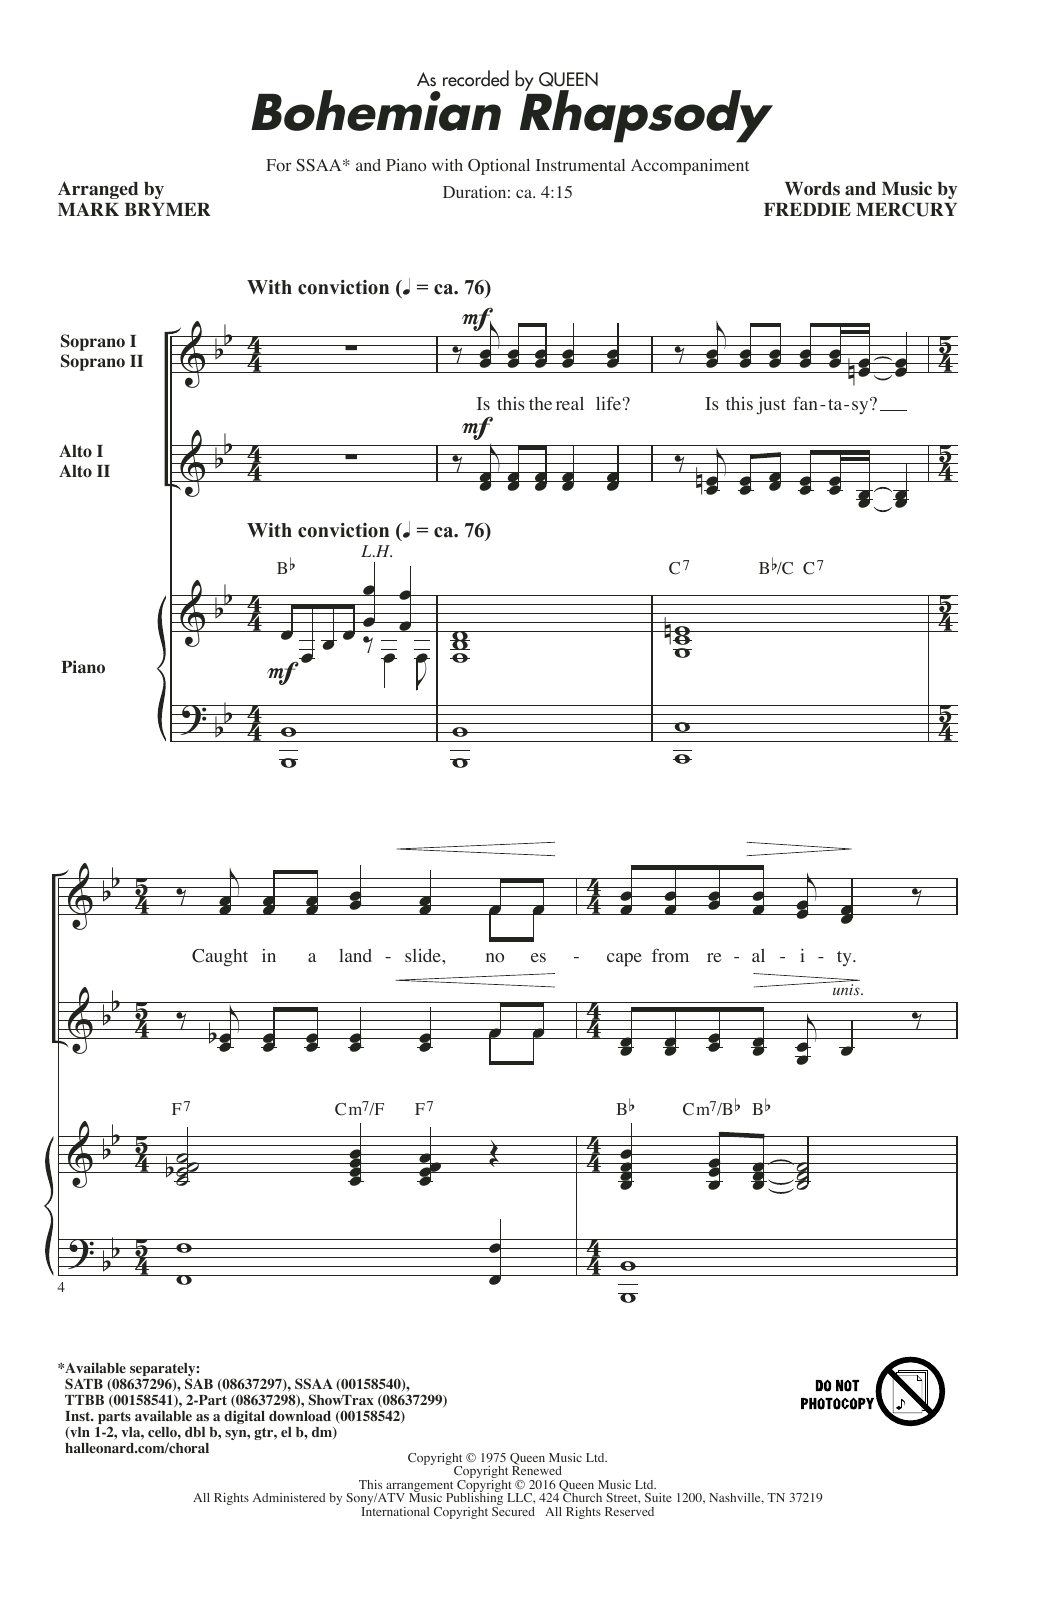 Queen Bohemian Rhapsody (arr. Mark Brymer) sheet music notes and chords arranged for SATB Choir